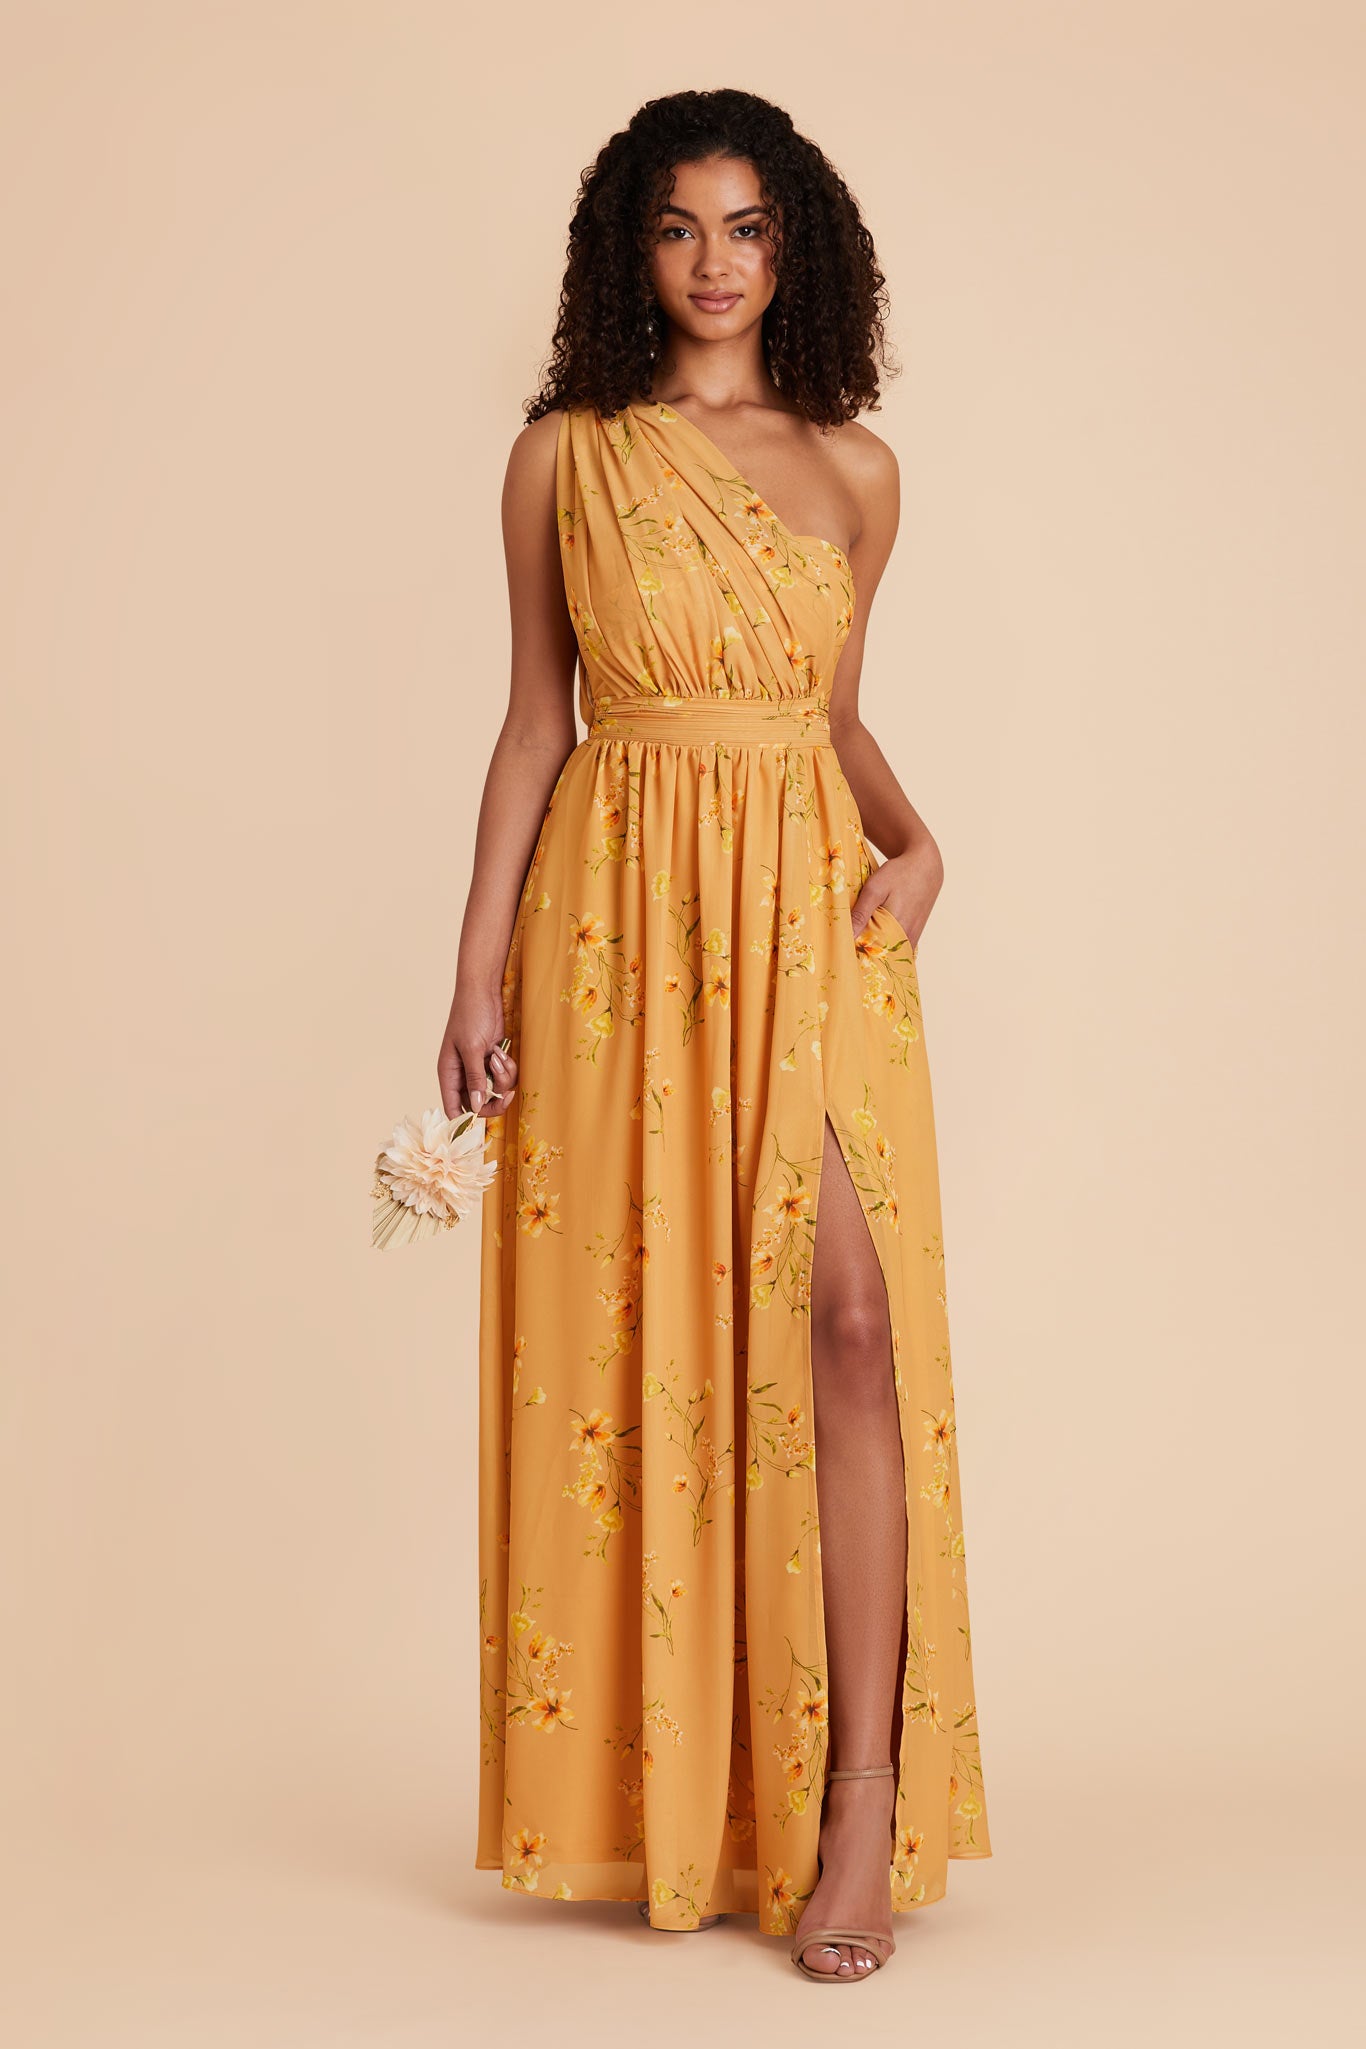 Marigold Le Fleur Grace Convertible Dress by Birdy Grey